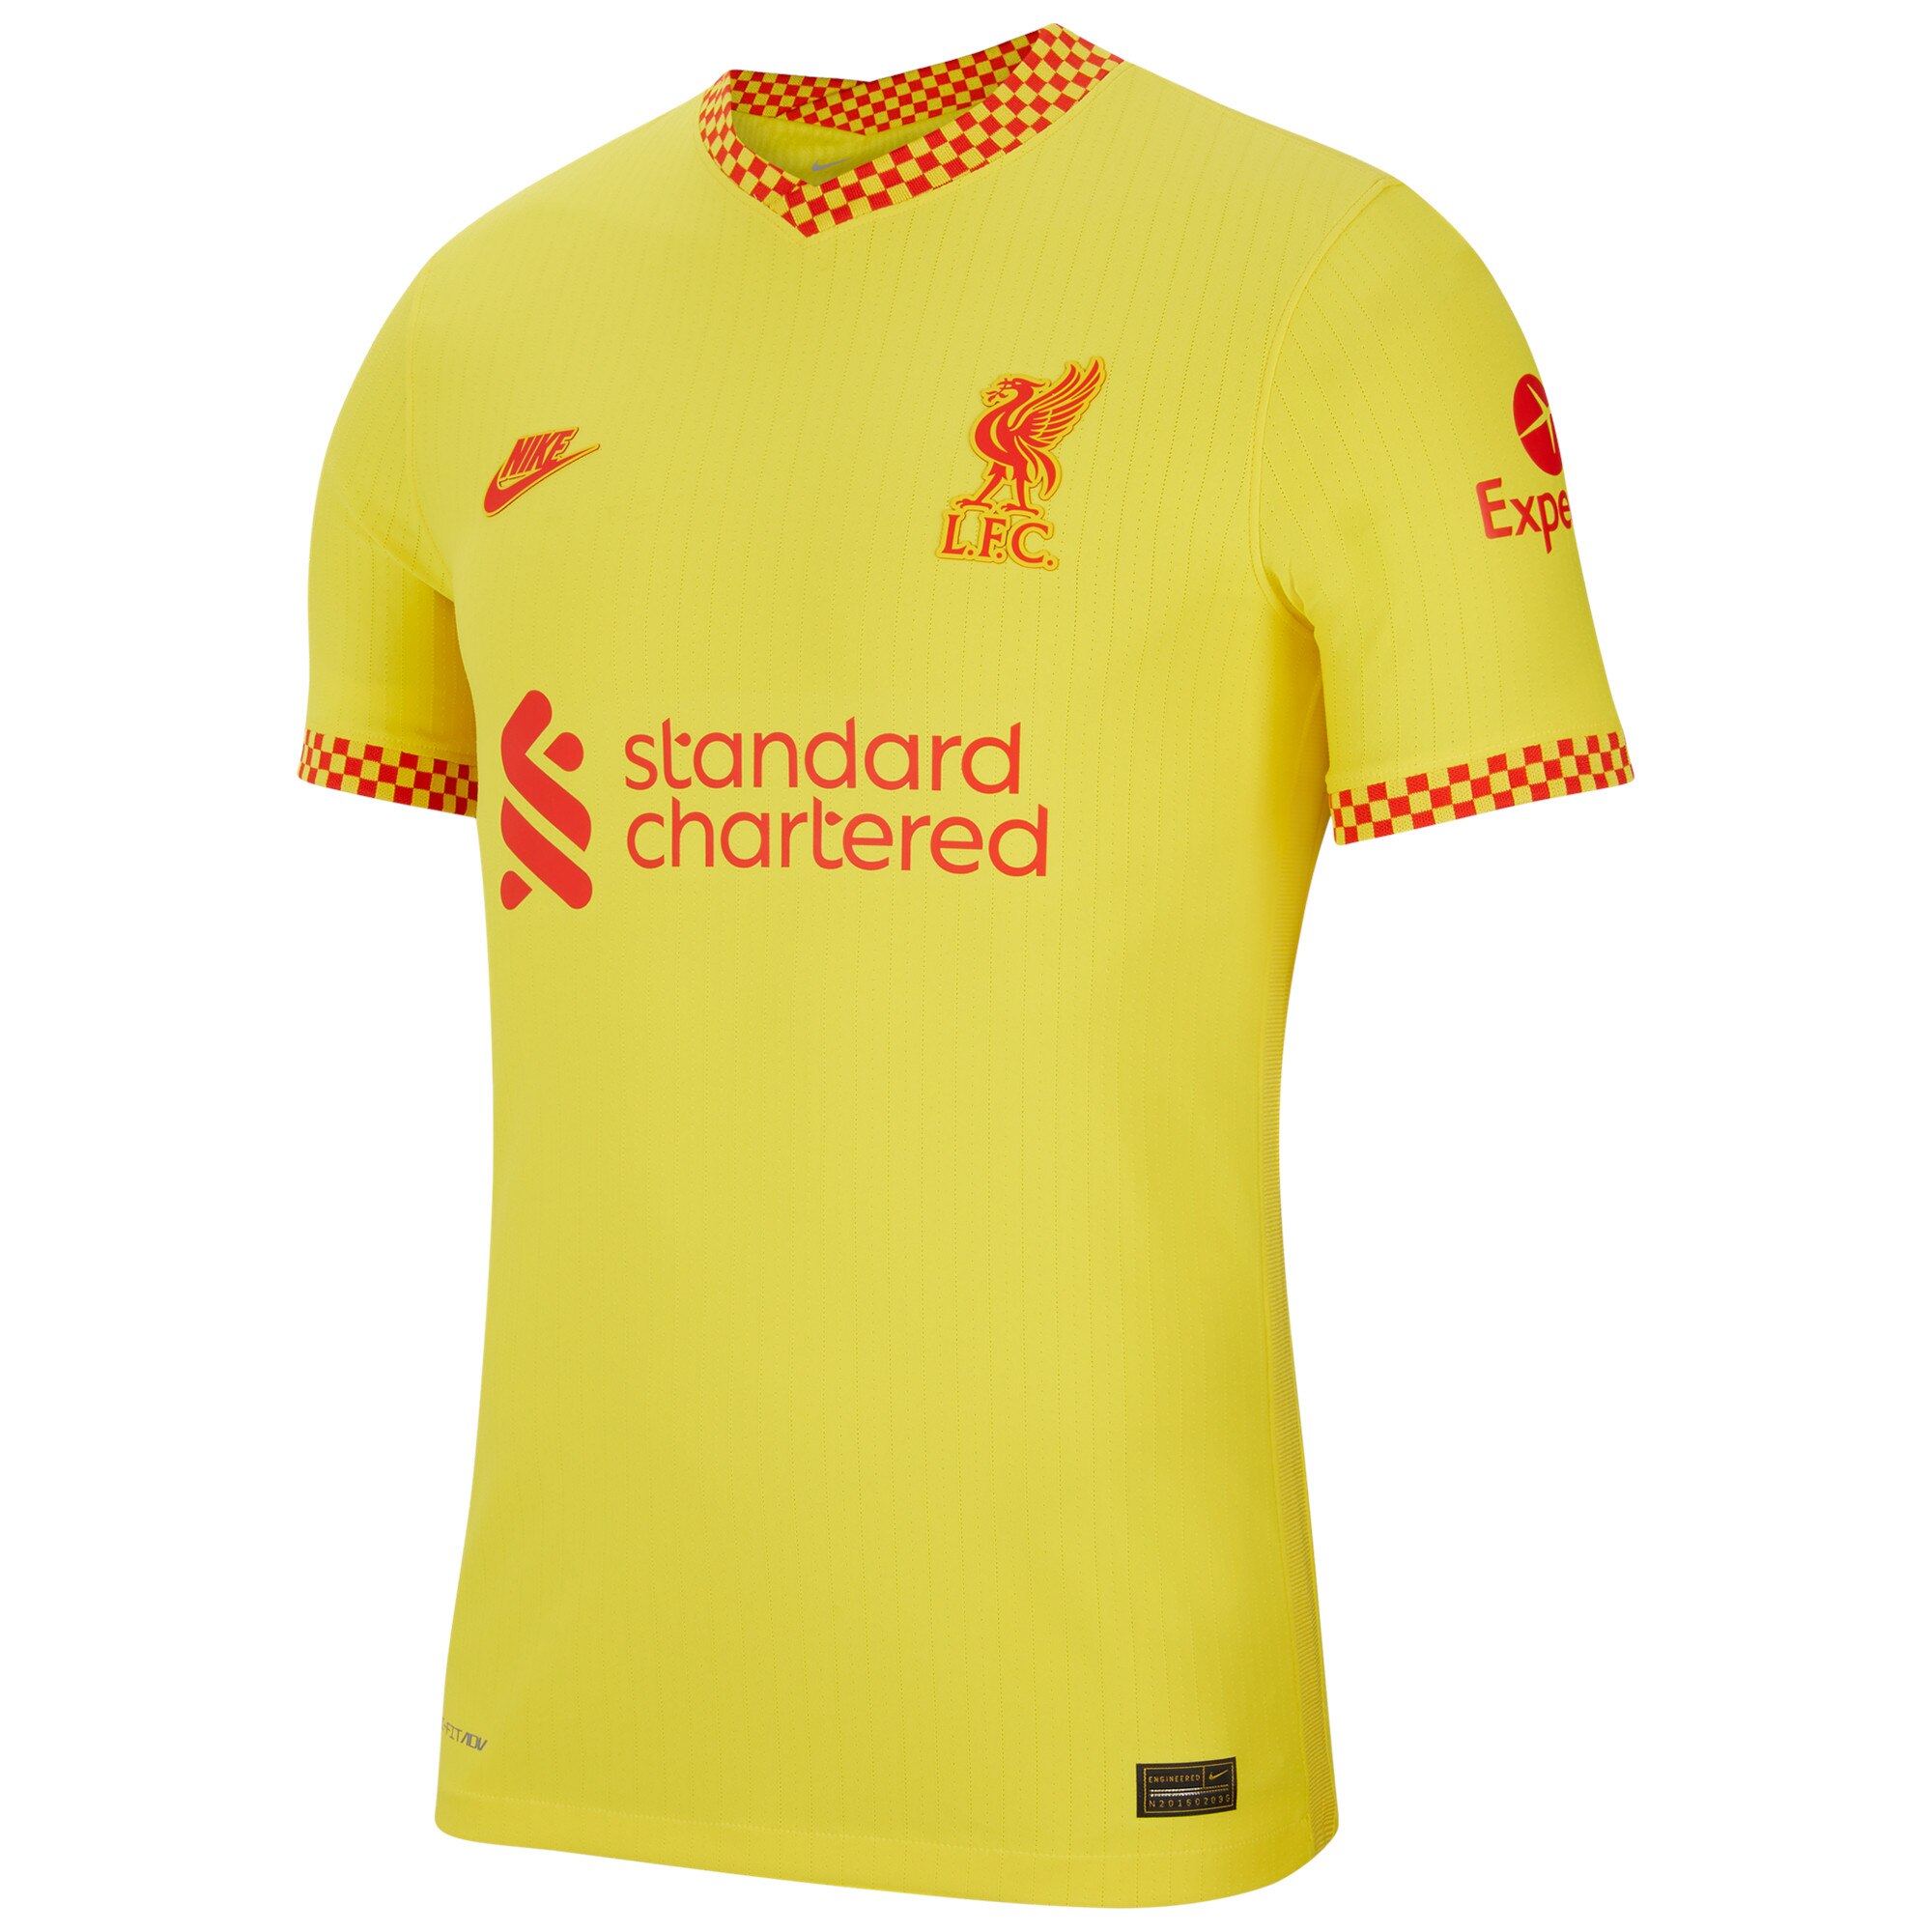 Liverpool Third Vapor Match Shirt 2021-22 with Thiago 6 printing